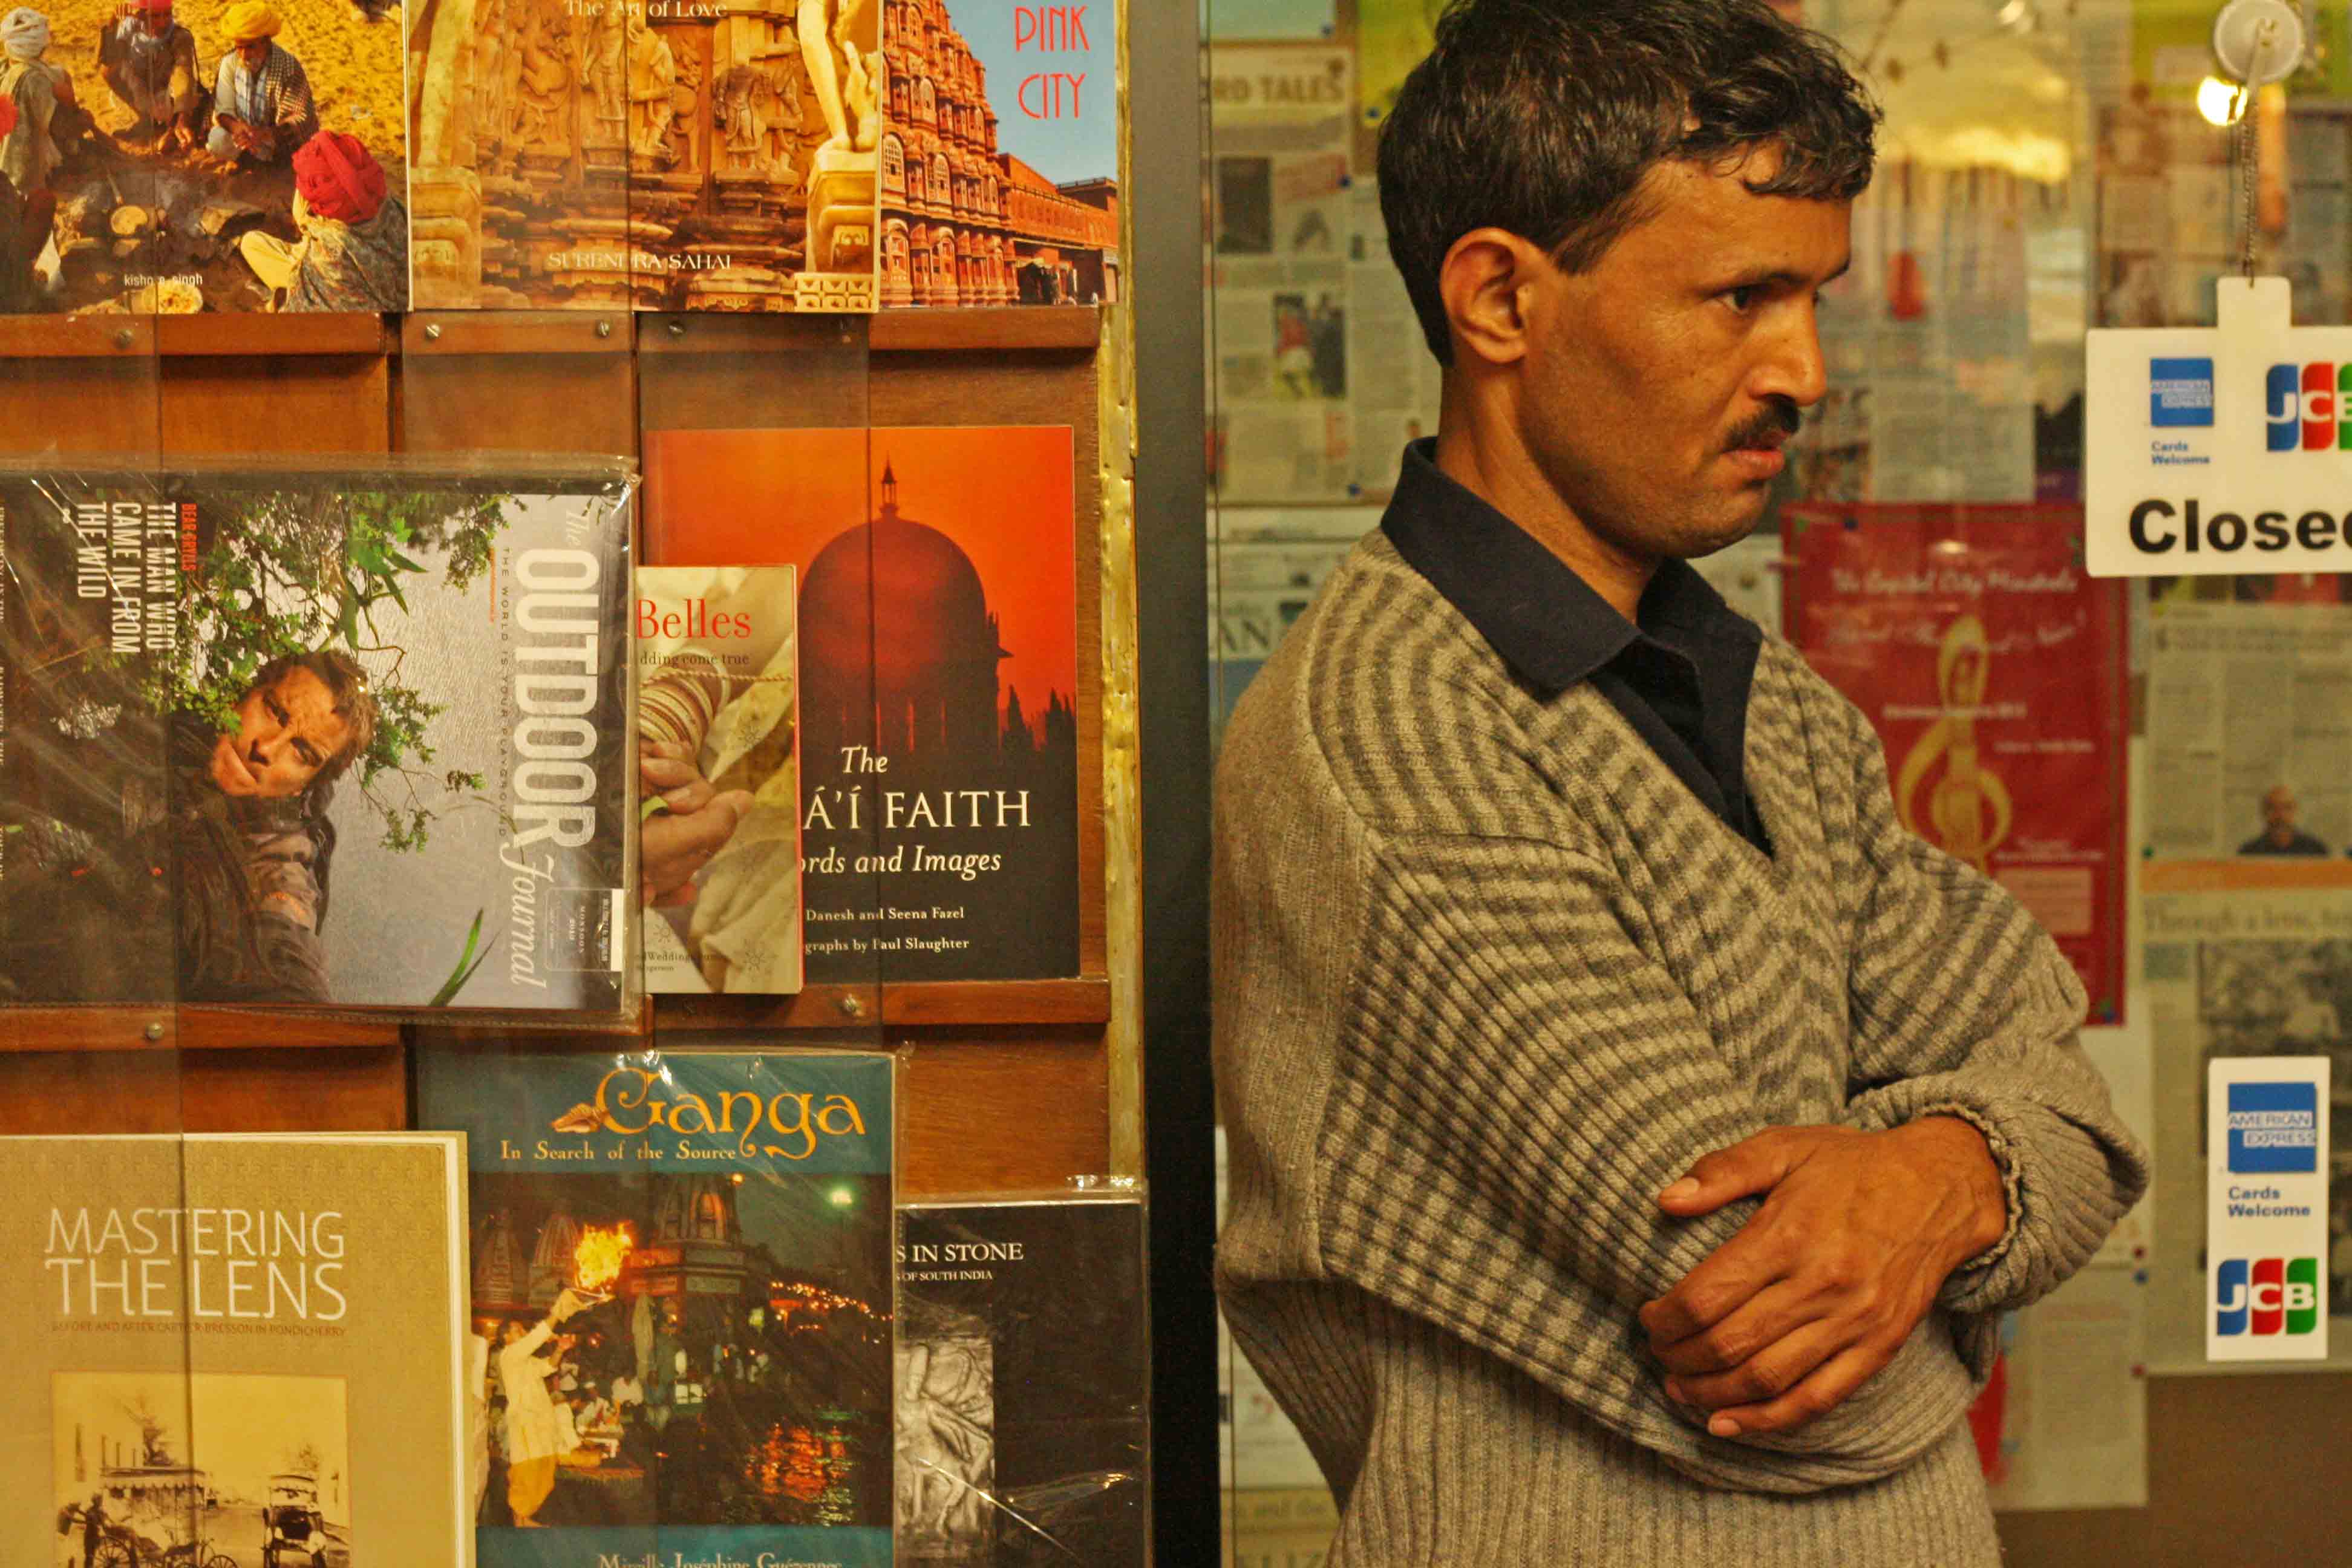 Mission Delhi - Sohan Singh, The Book Shop